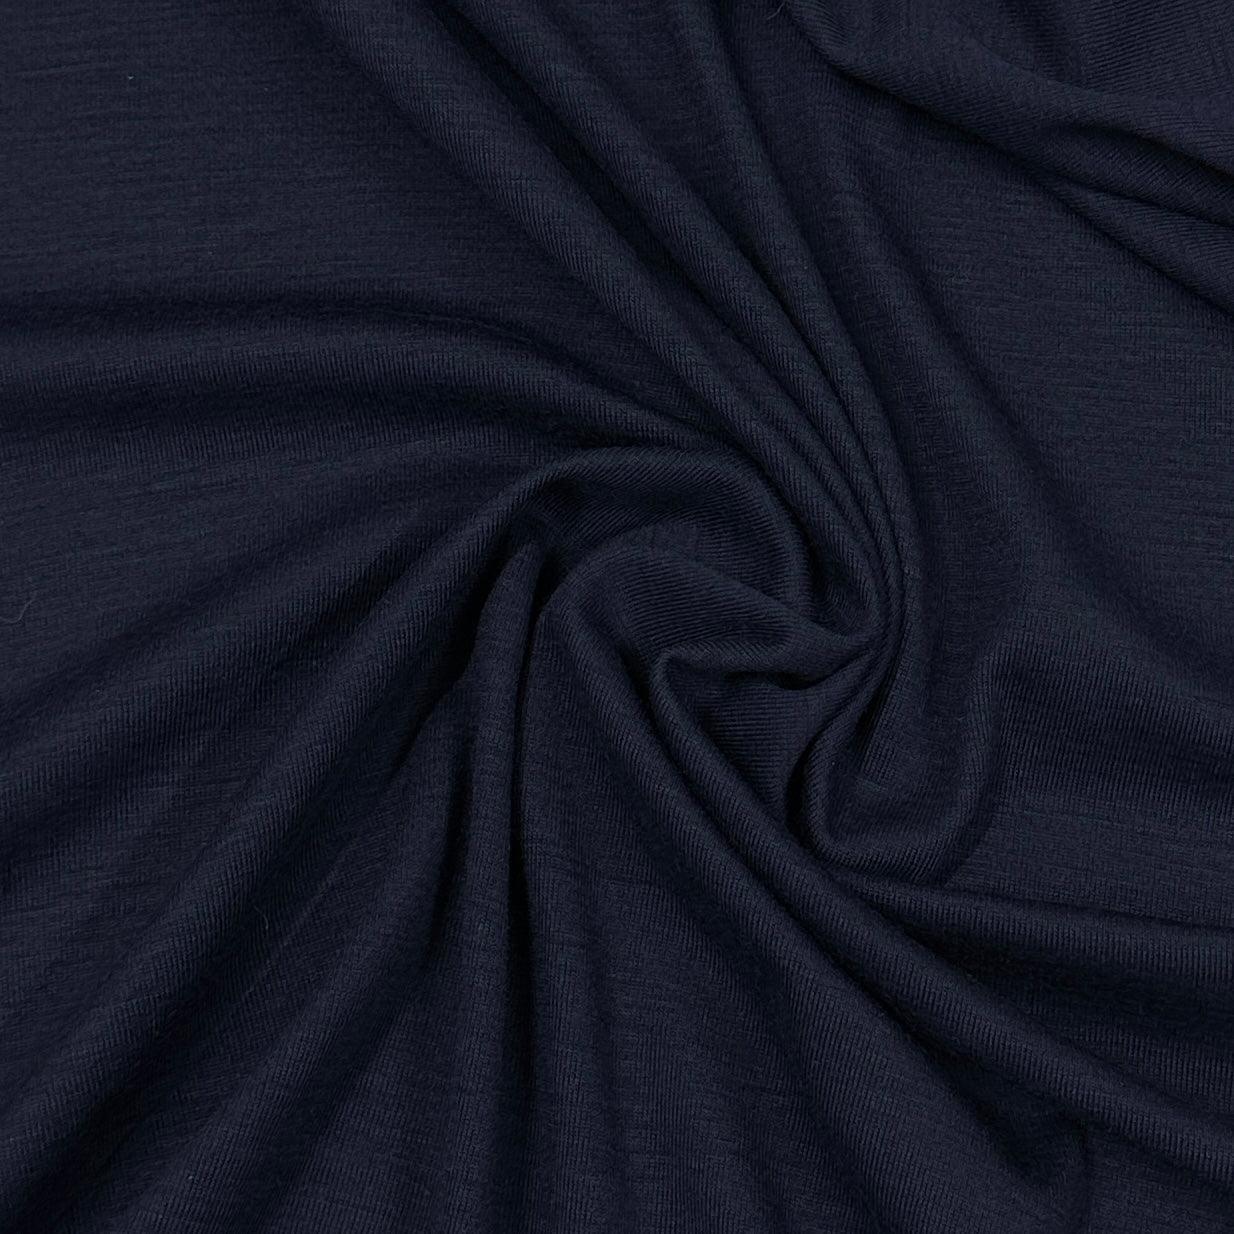 Midnight Merino Wool Rib Knit Fabric - 1x1 - Nature's Fabrics